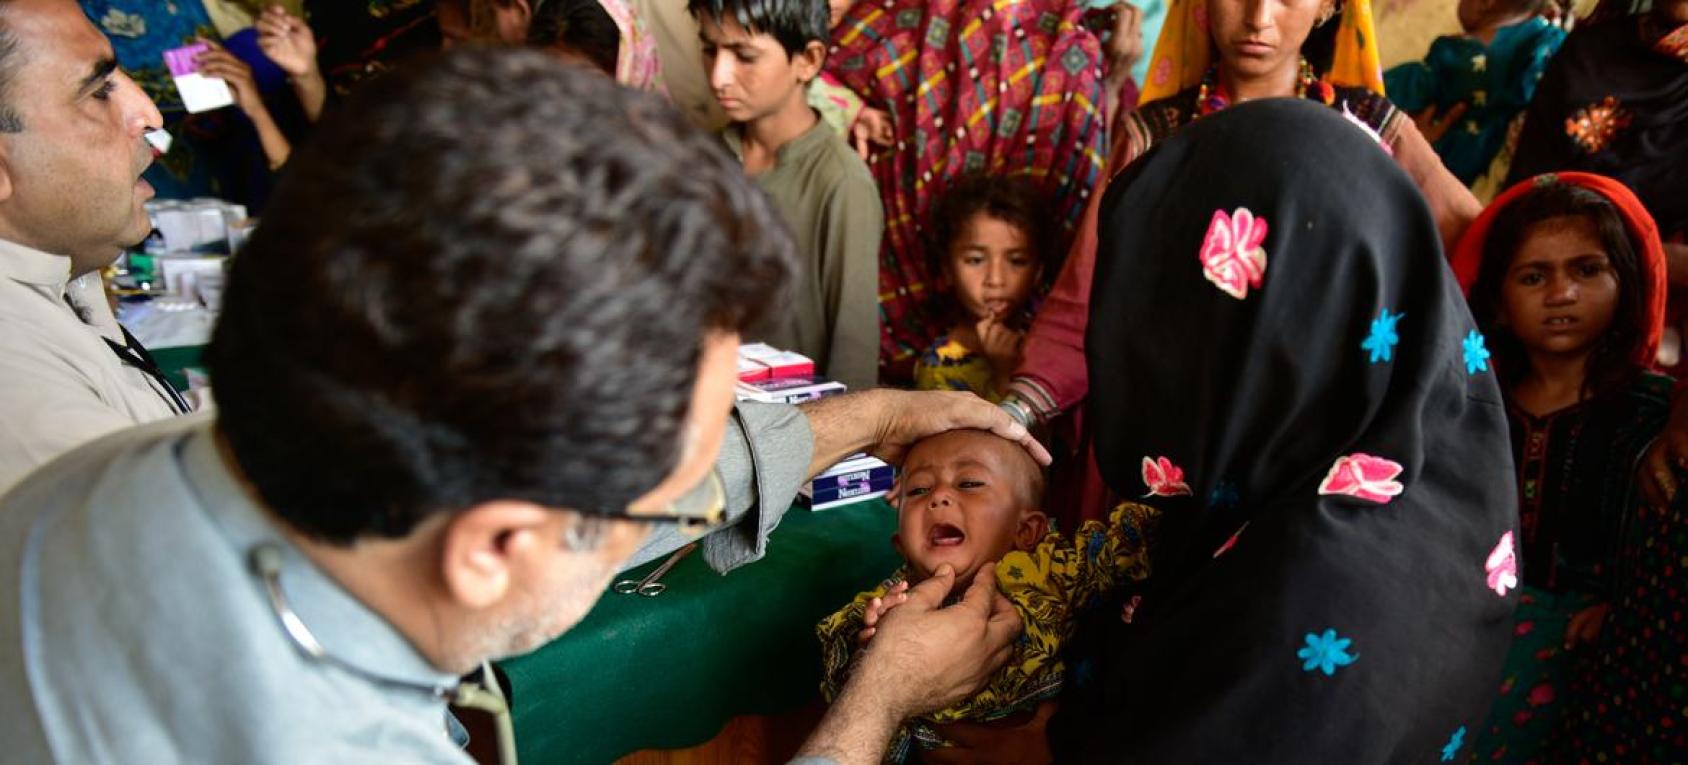 Children affected by floods in Pakistan undergo a medical examination.